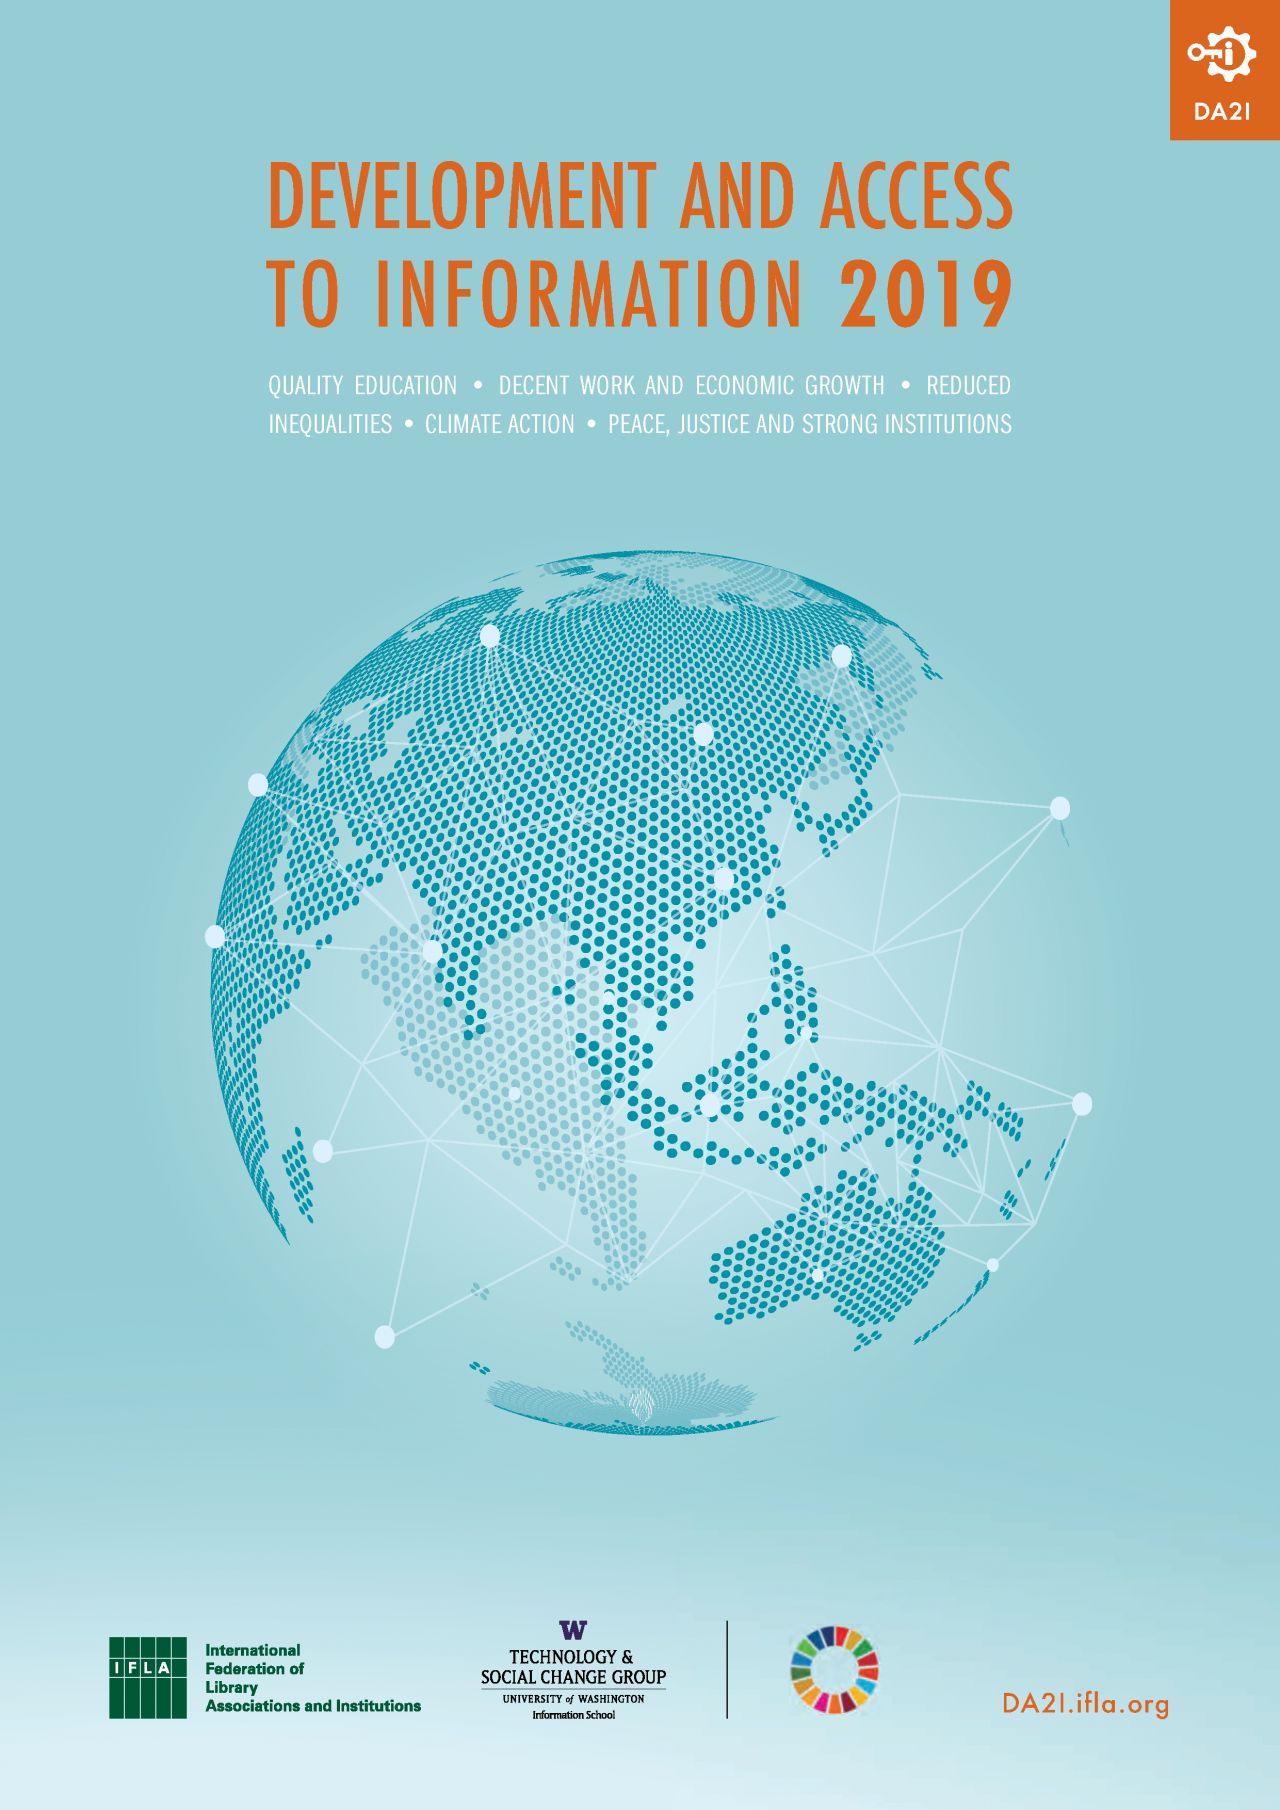 Development and Access to Information (DA2I) Report 2019